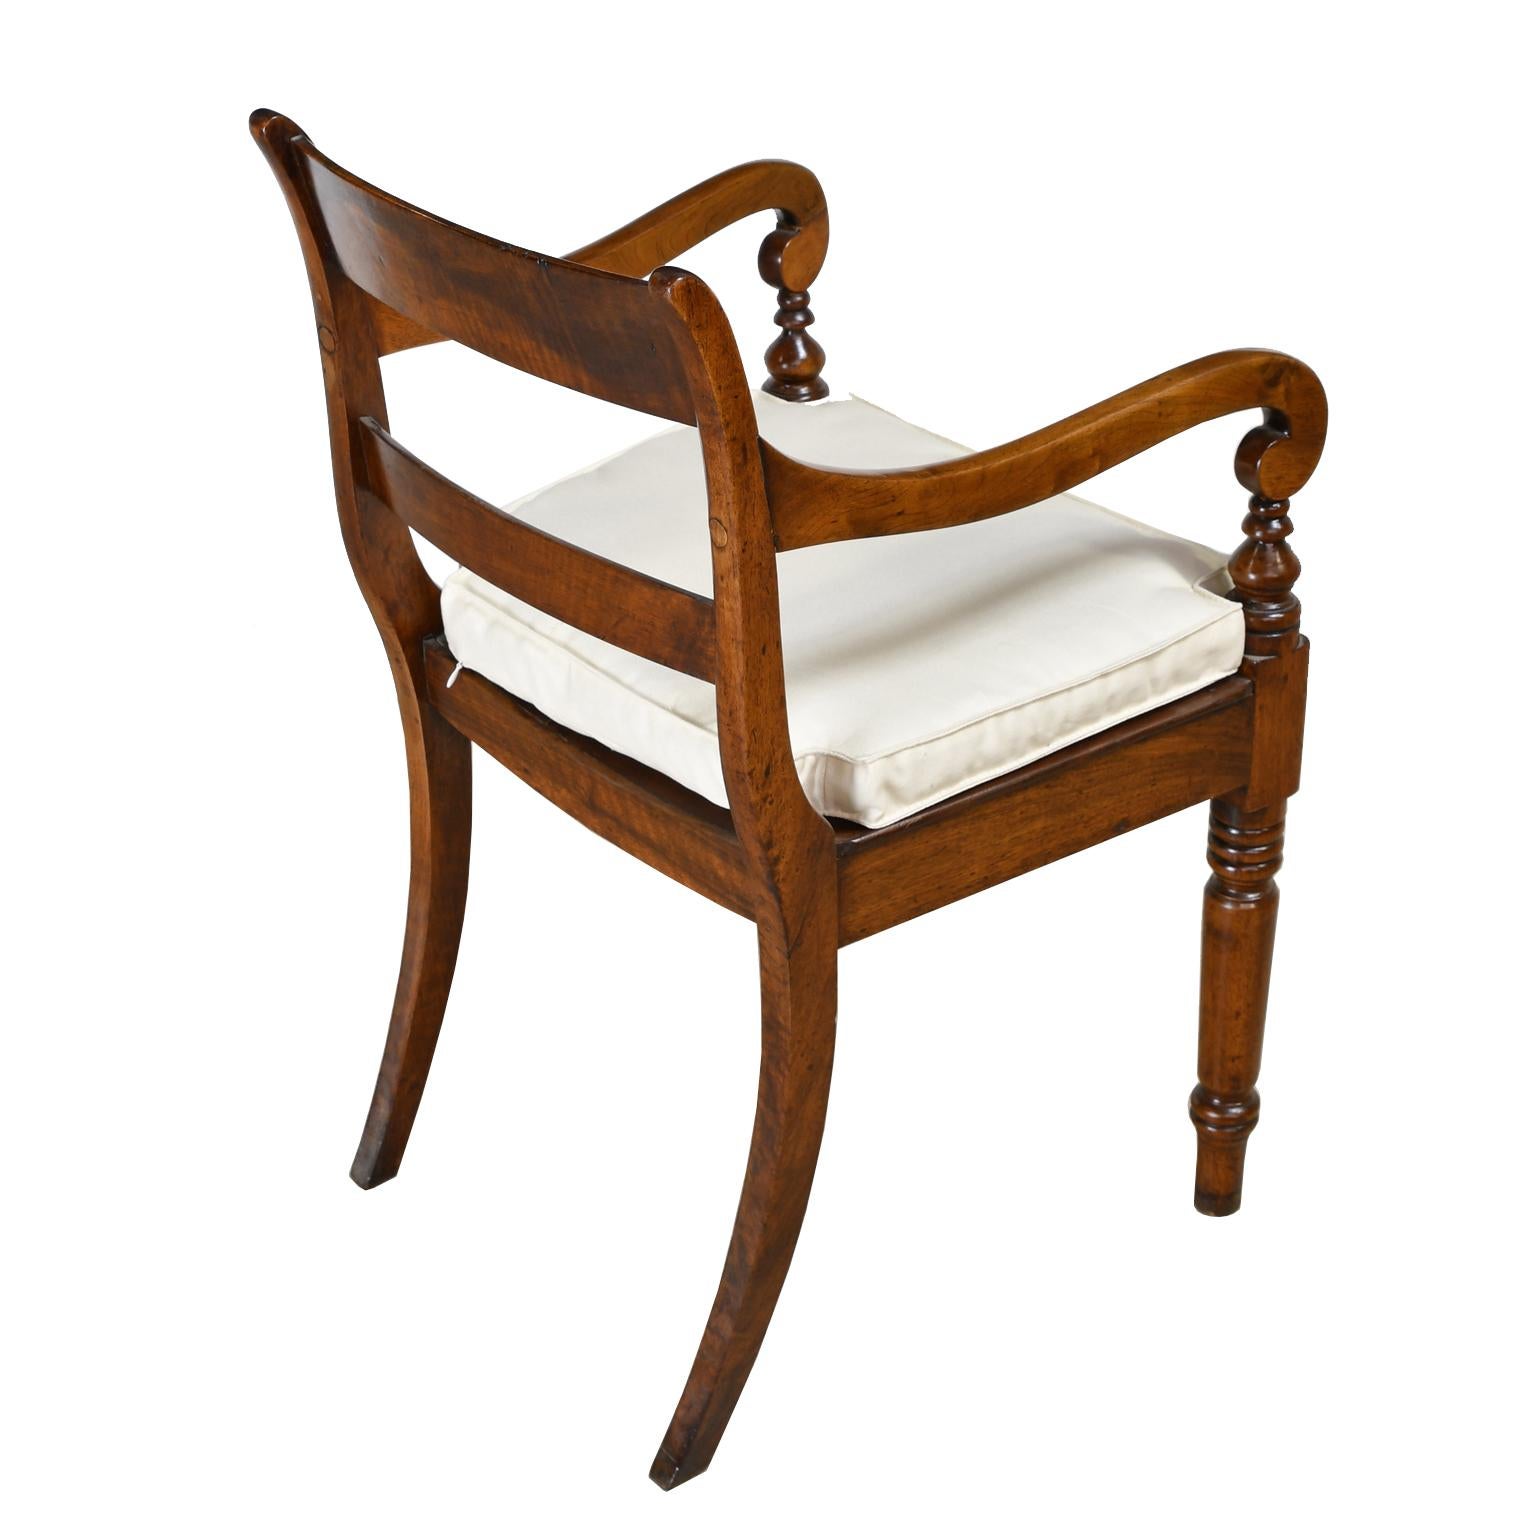 Unknown British Colonial Desk Chair/ Armchair in Walnut, circa 1830